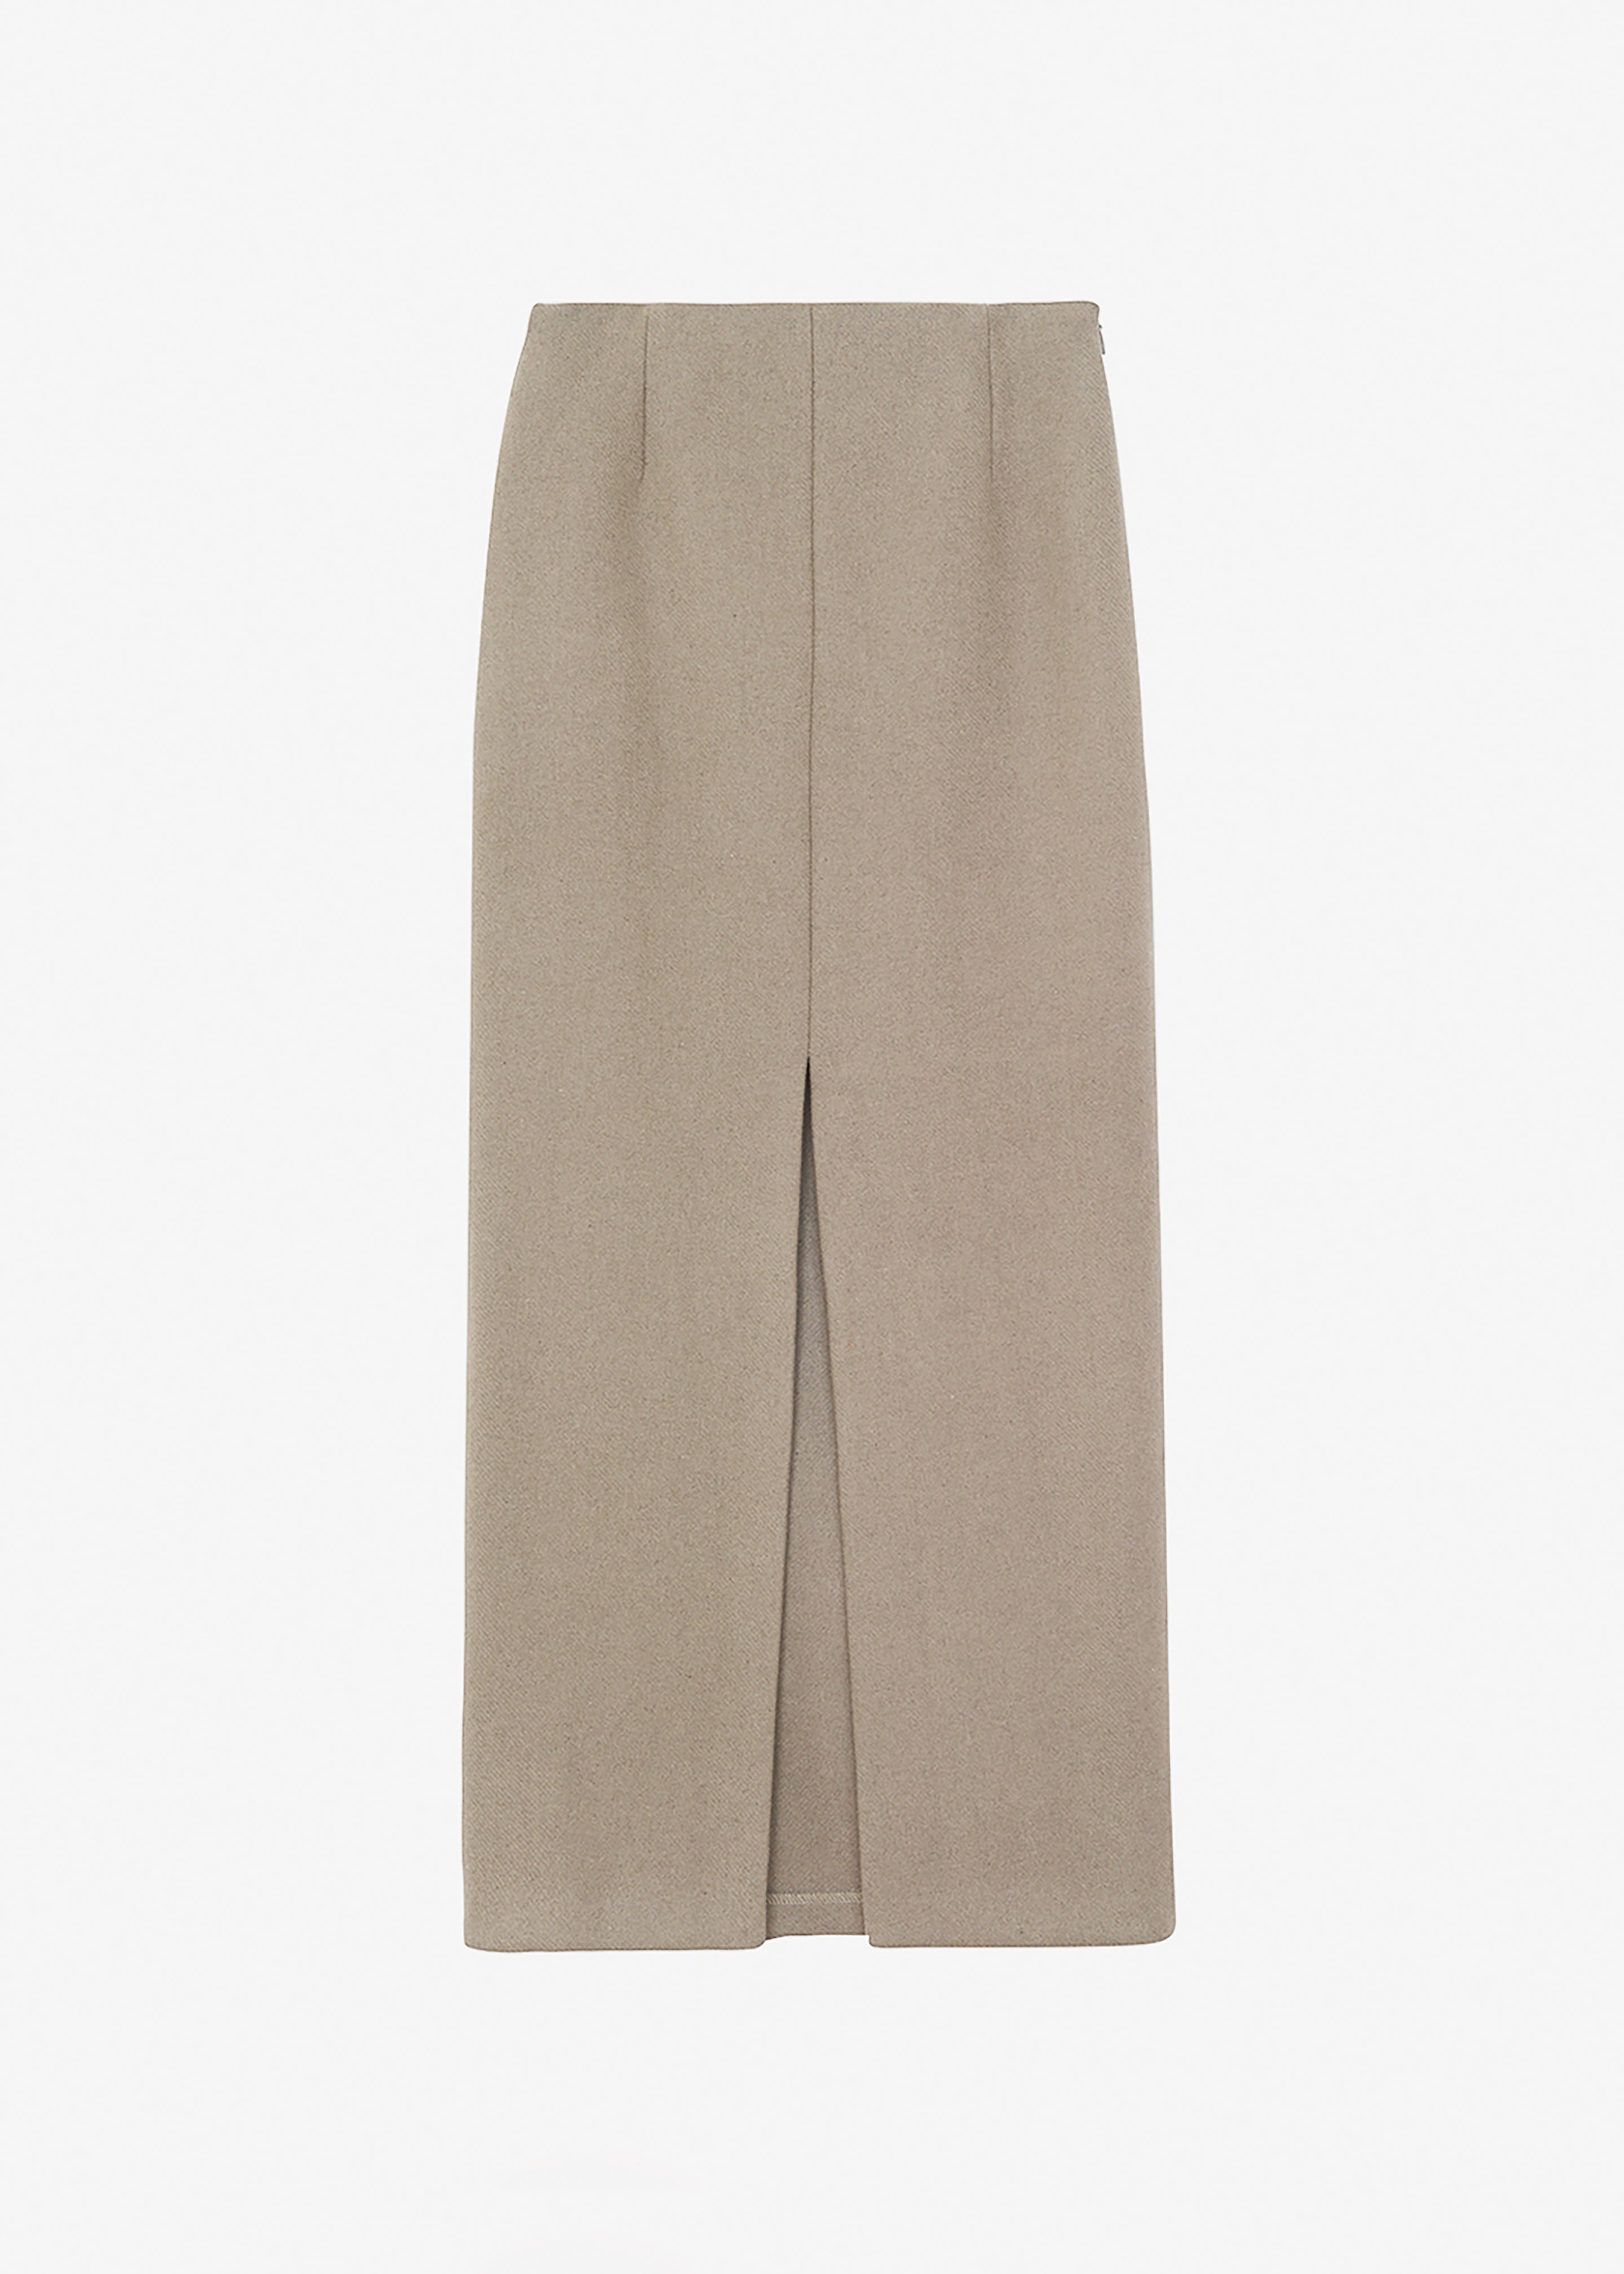 Neasi Wool-Blend Pencil Skirt - Taupe - 11